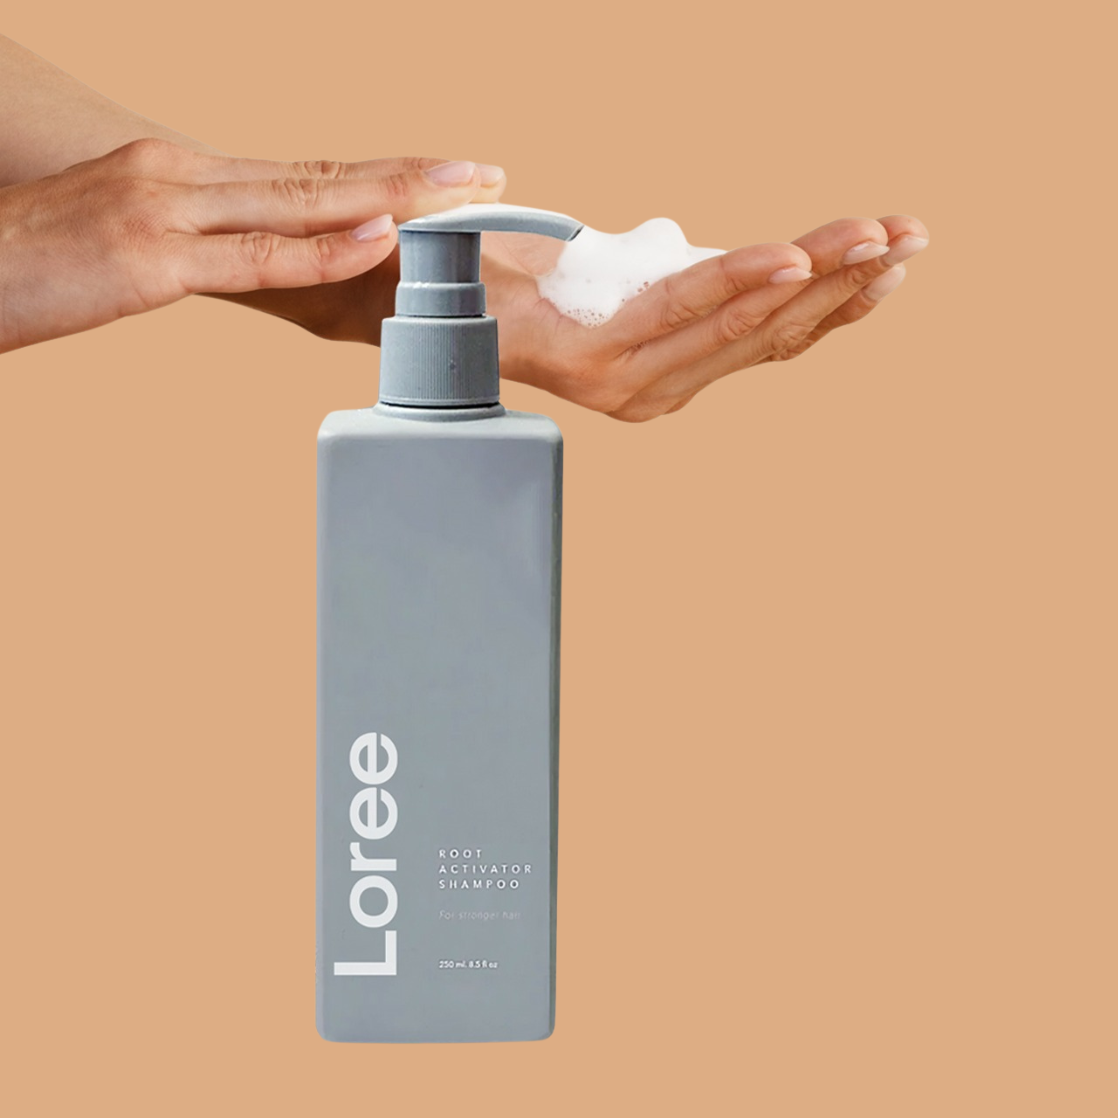 Loree - Activator Shampoo for Women